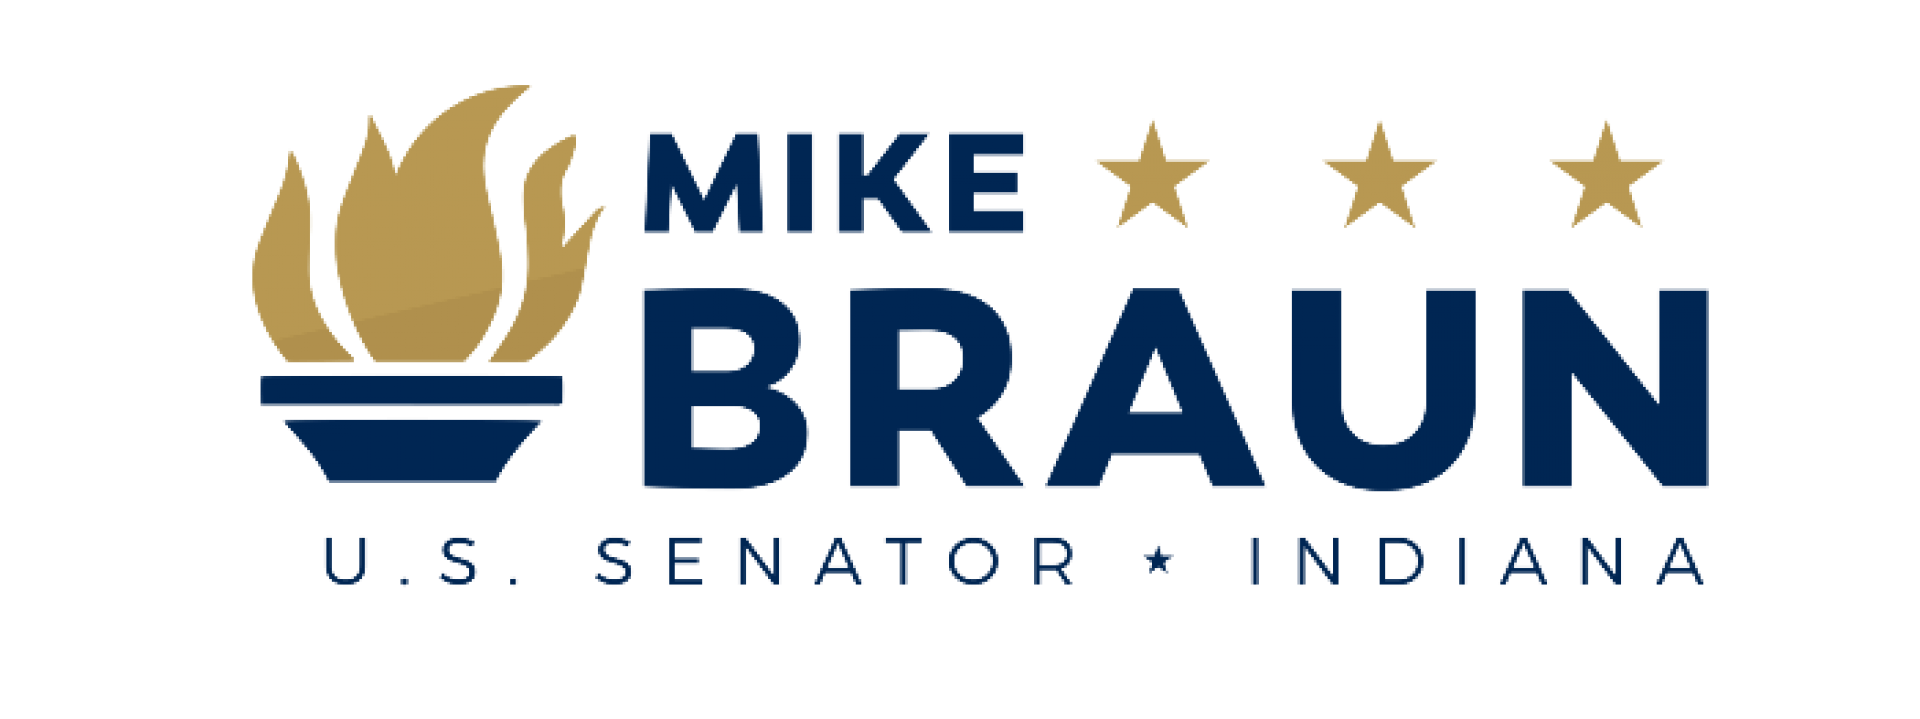 Senator Logo - Senator Braun Indiana Logo | Senator Mike Braun